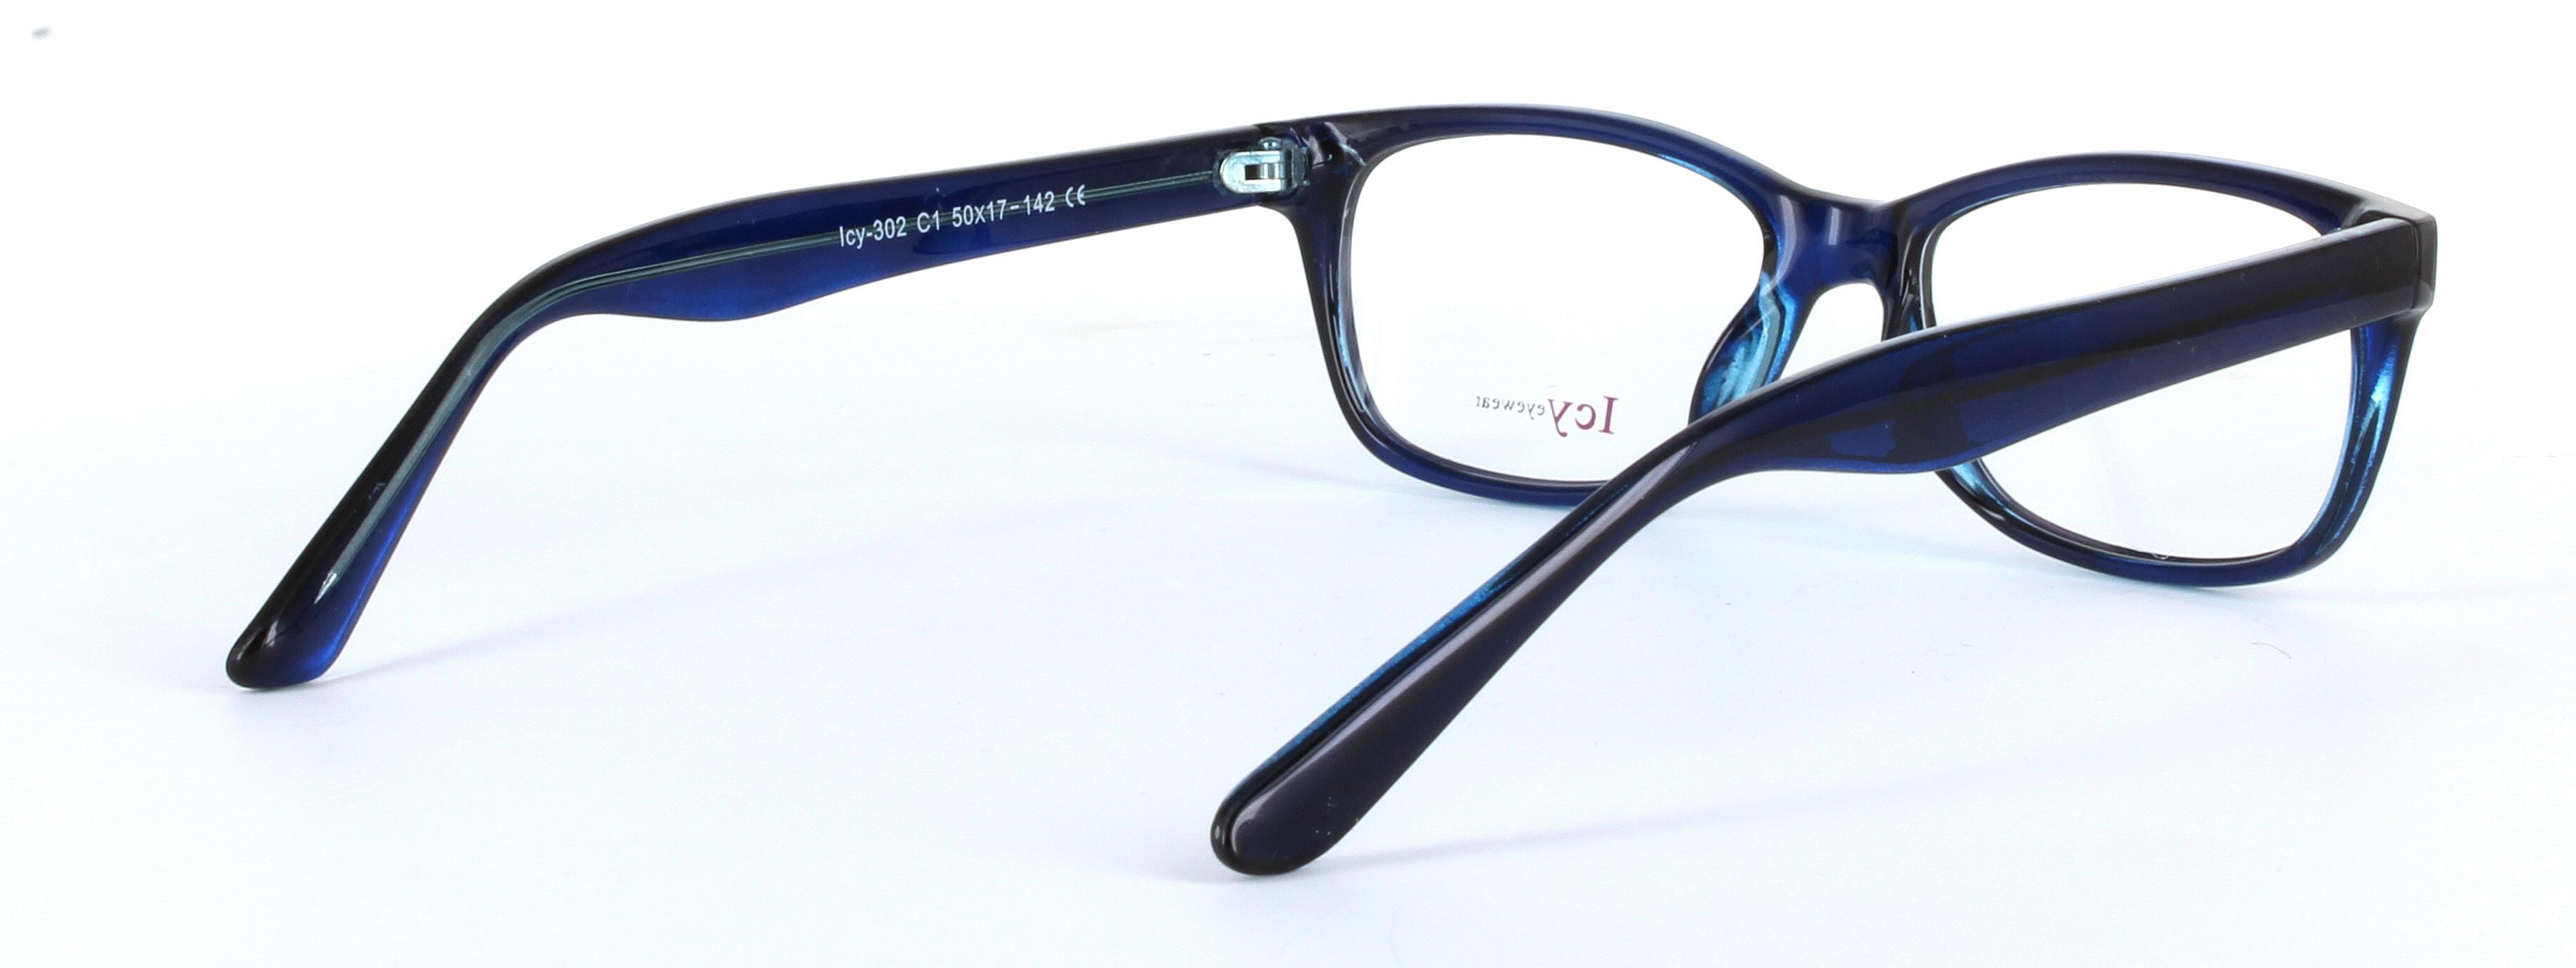 Bailey Blue Rim Oval Square Plastic Glasses - Image View 4